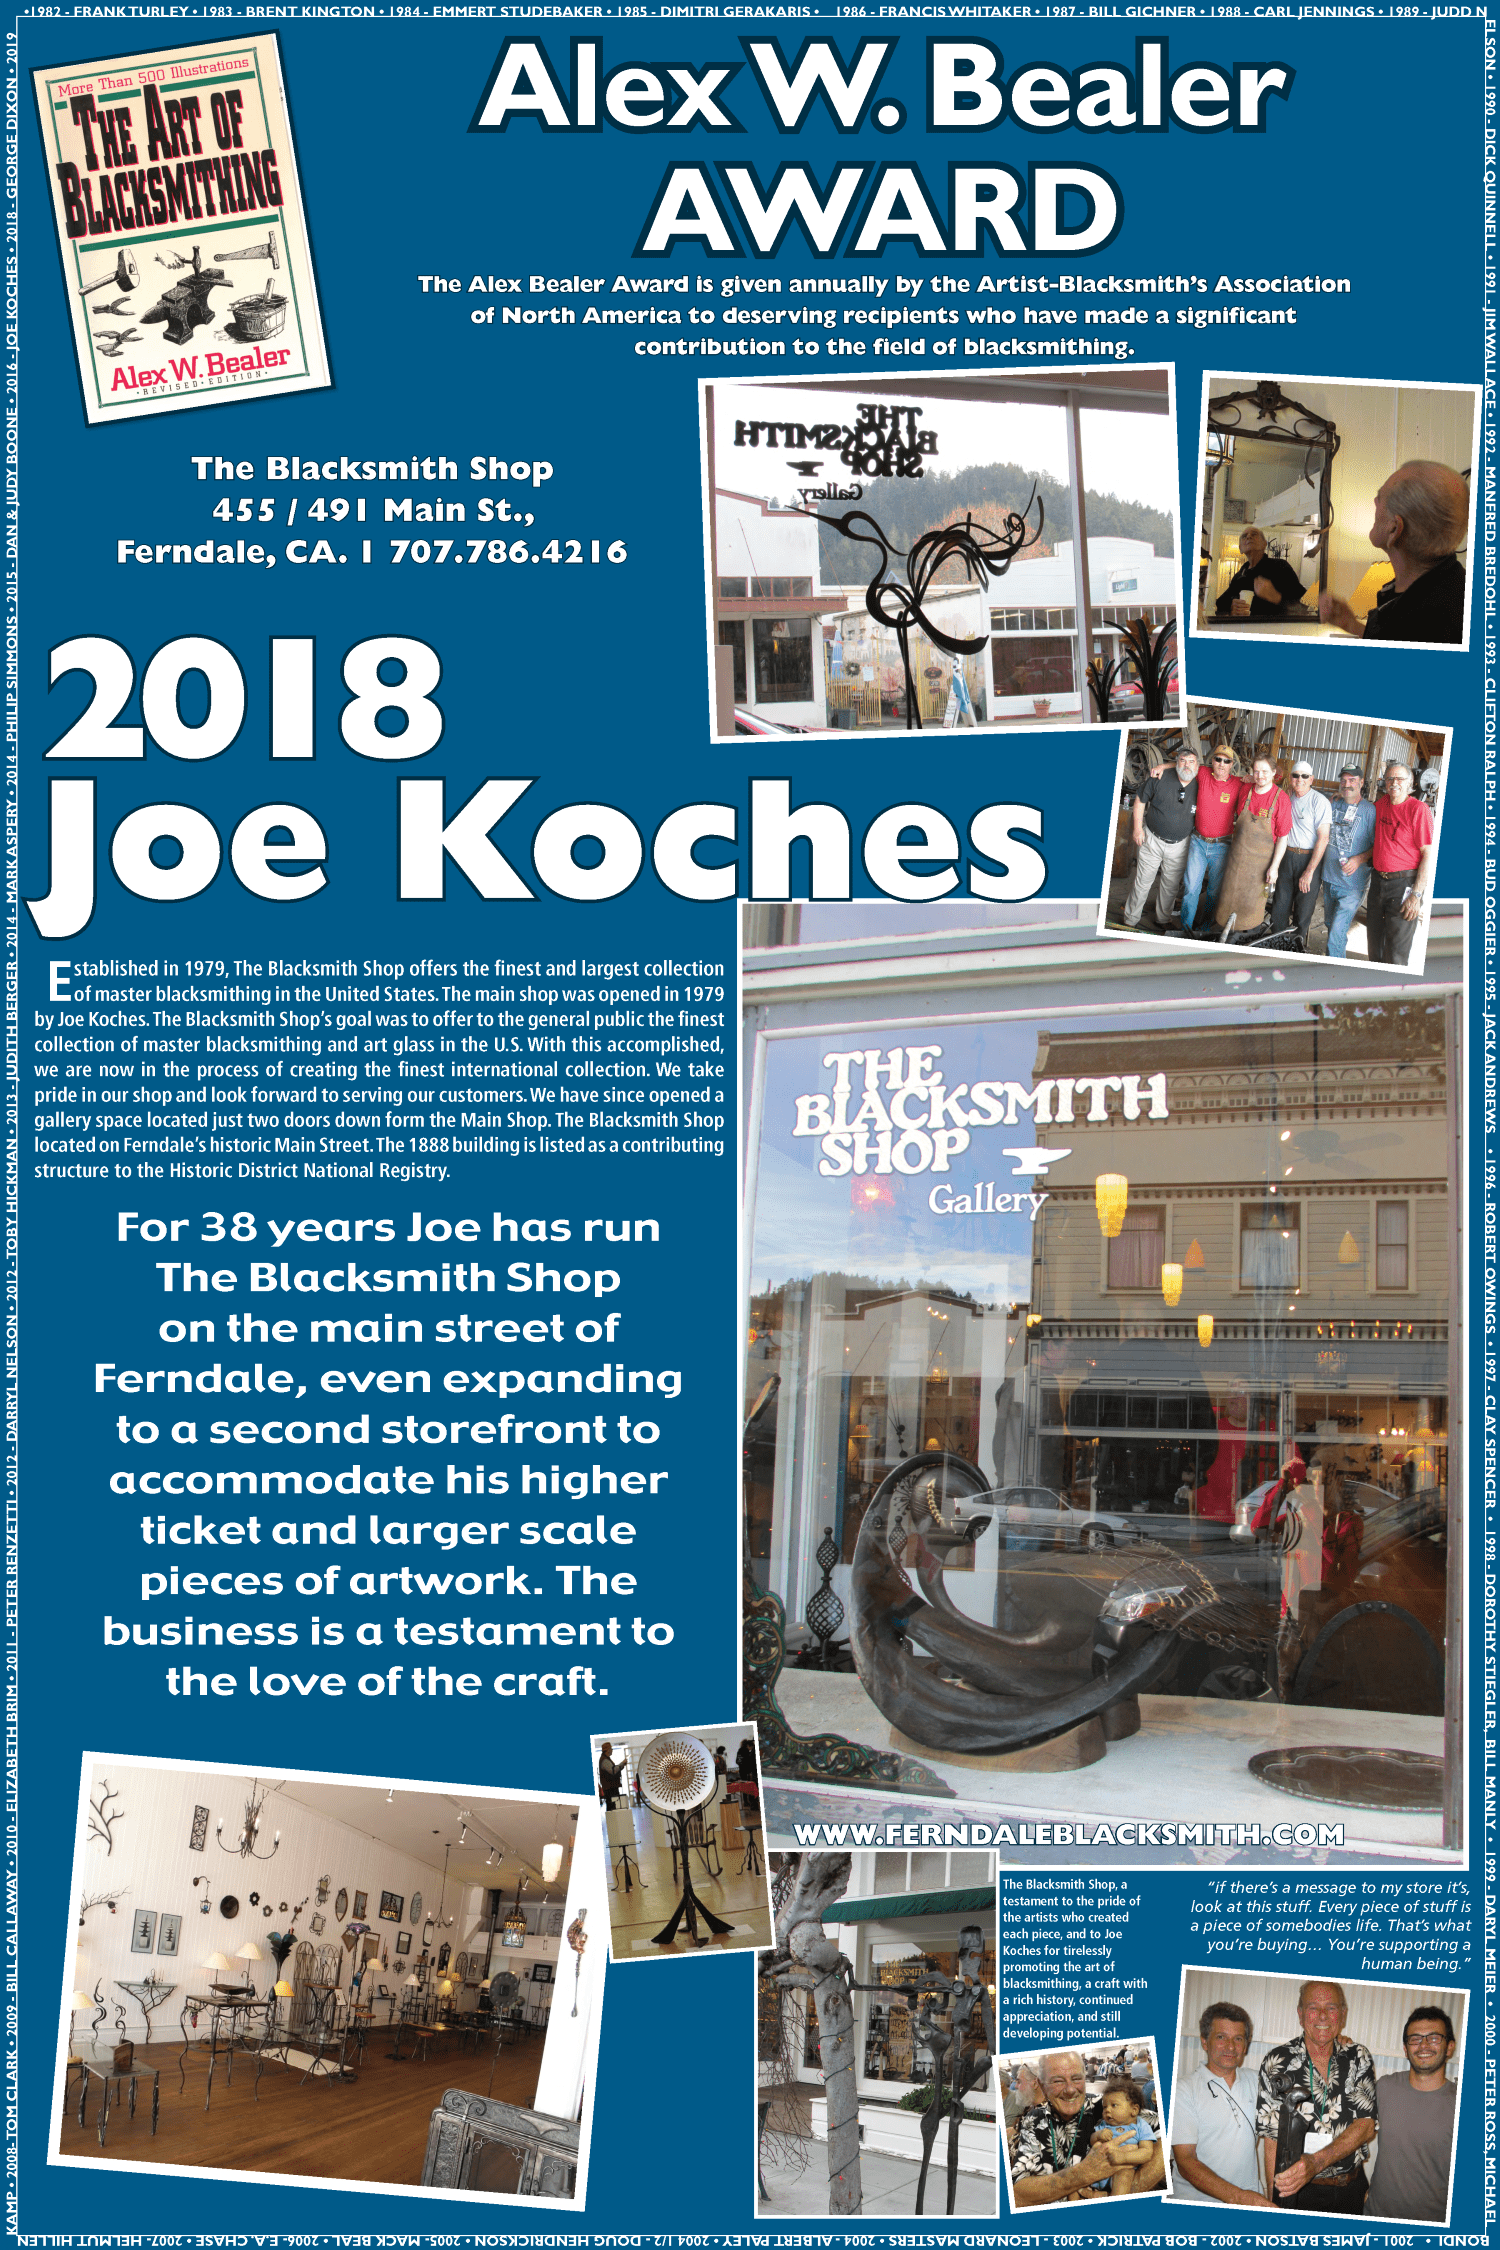 Poster about 2018 Bealer Award winner, Joe Koches.